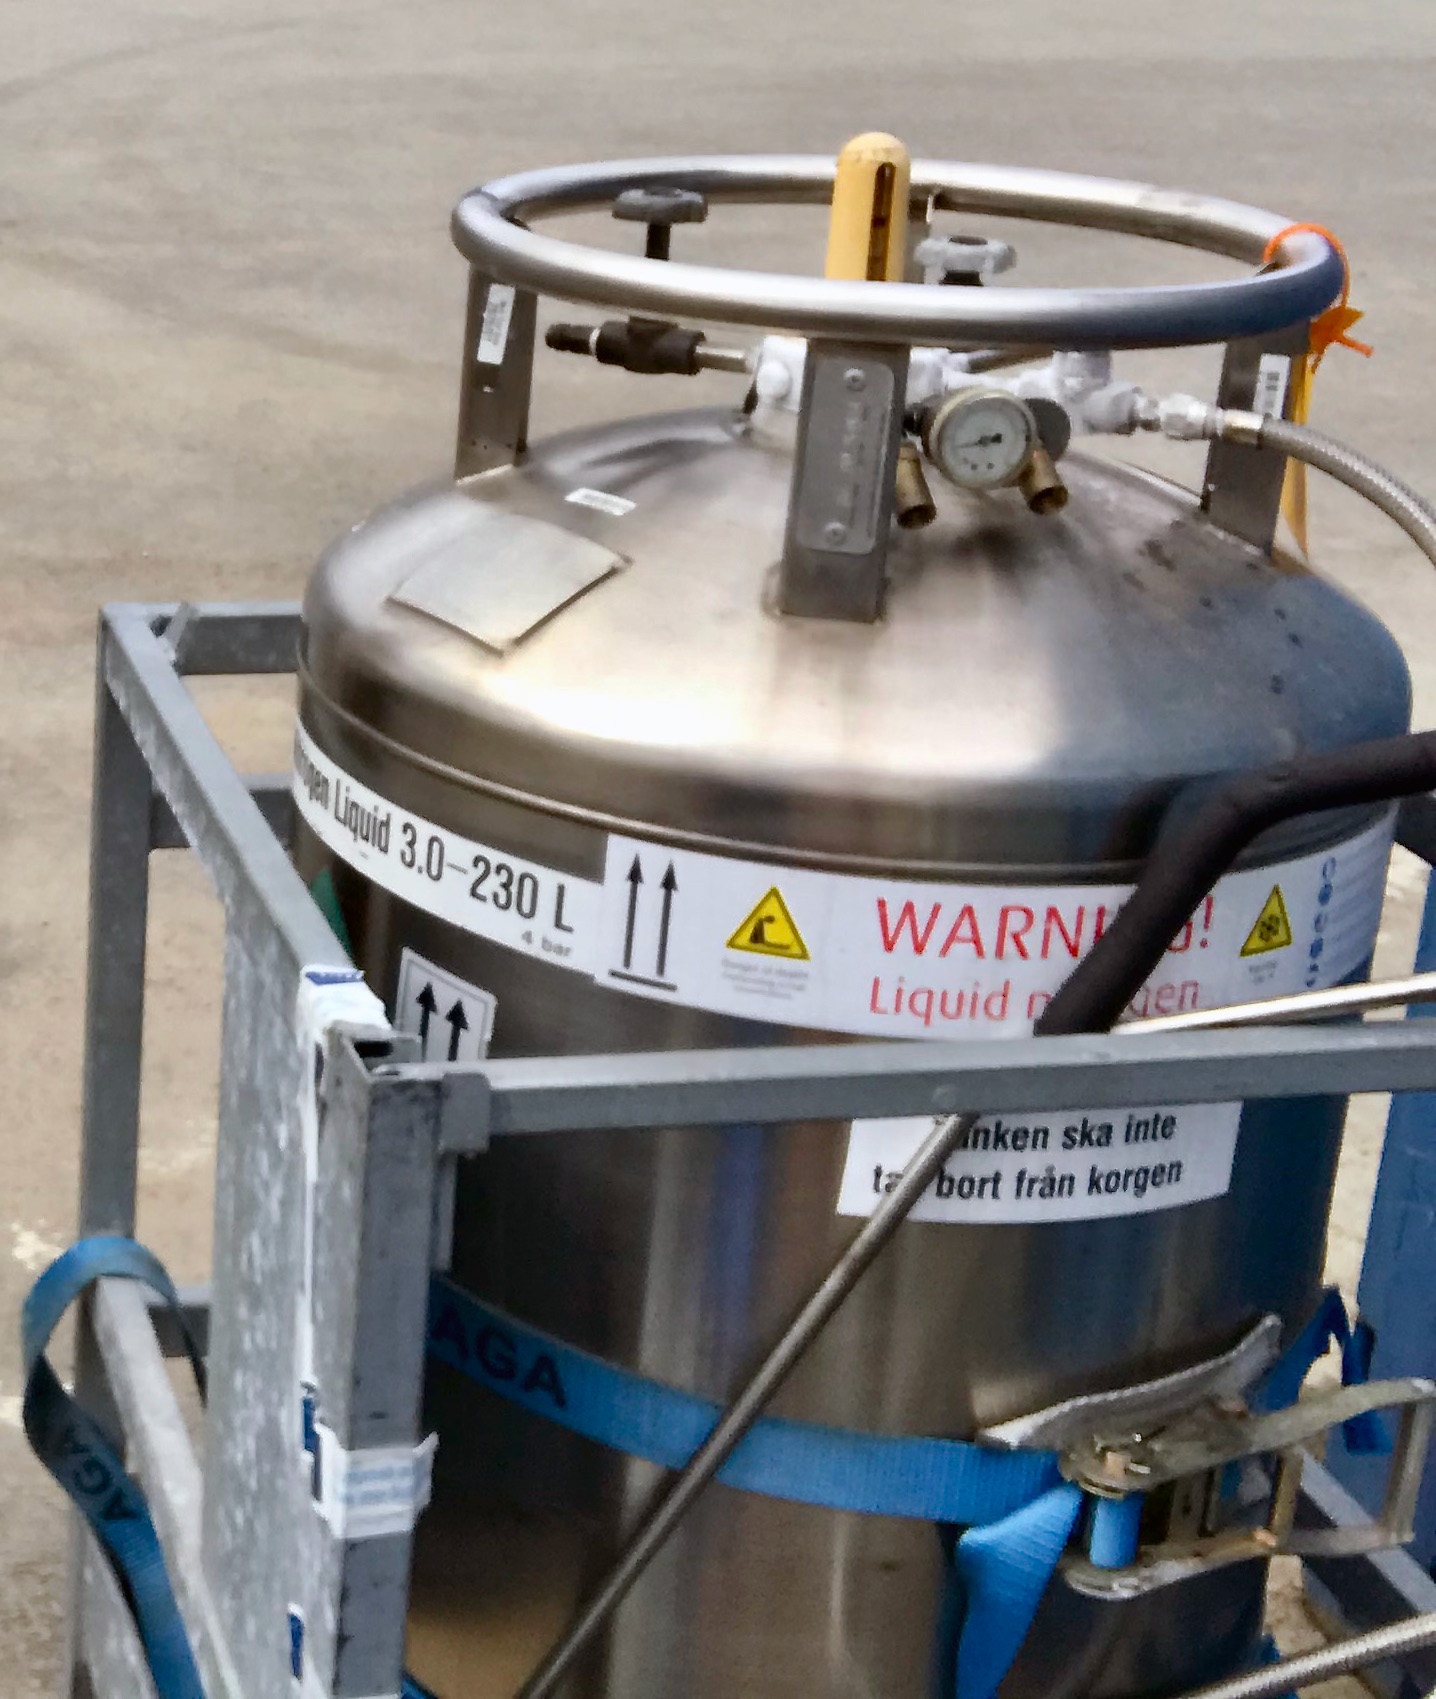 A liquid nitrogen tank